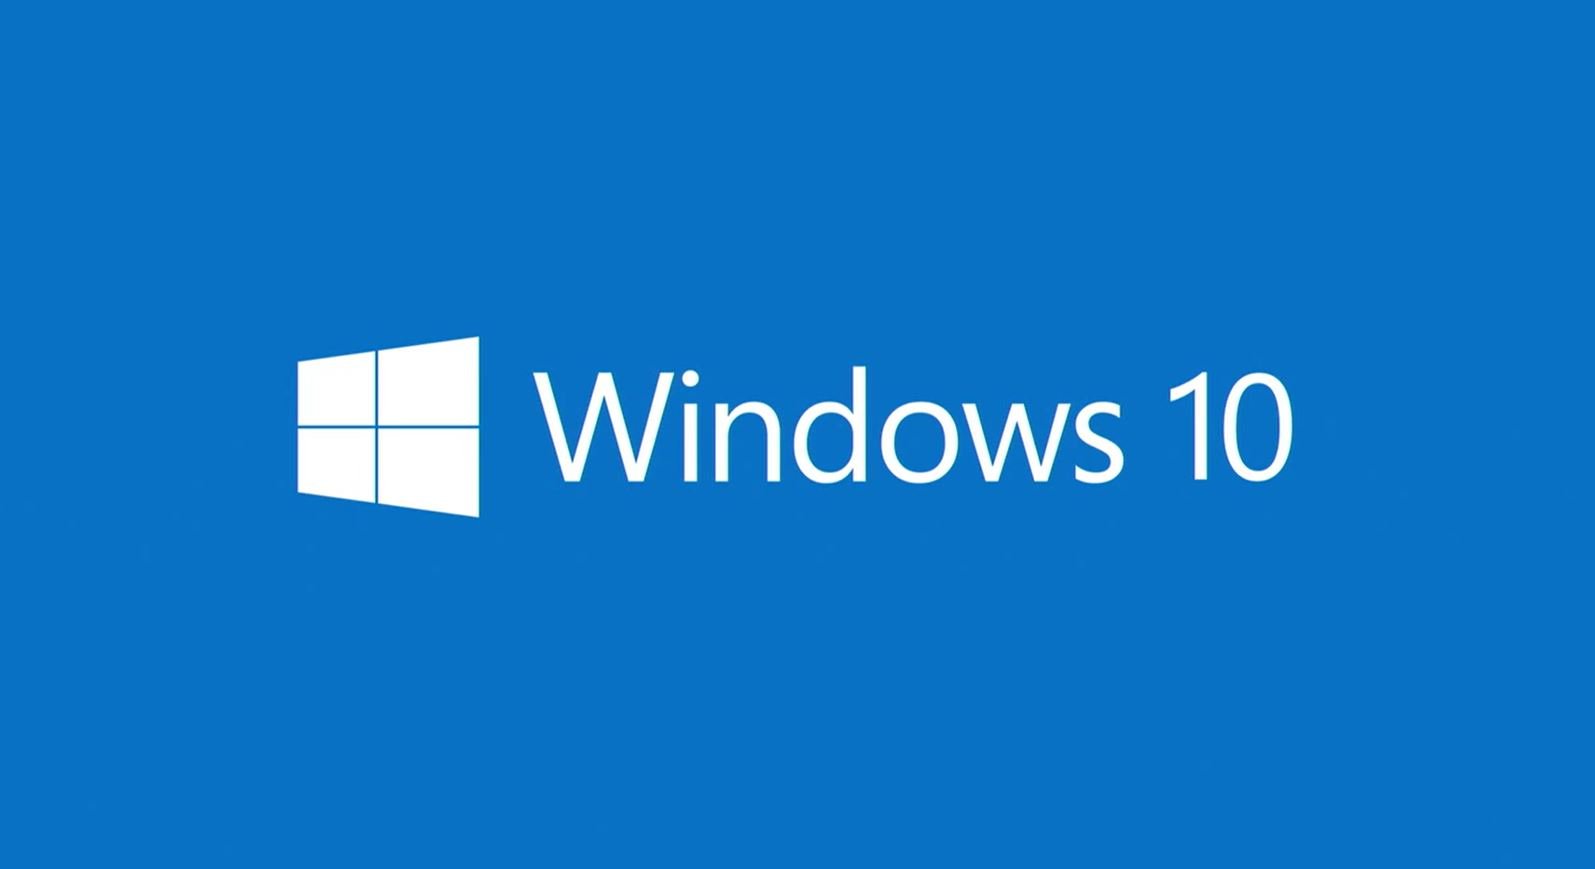 Reserve Your Windows 10 Copy